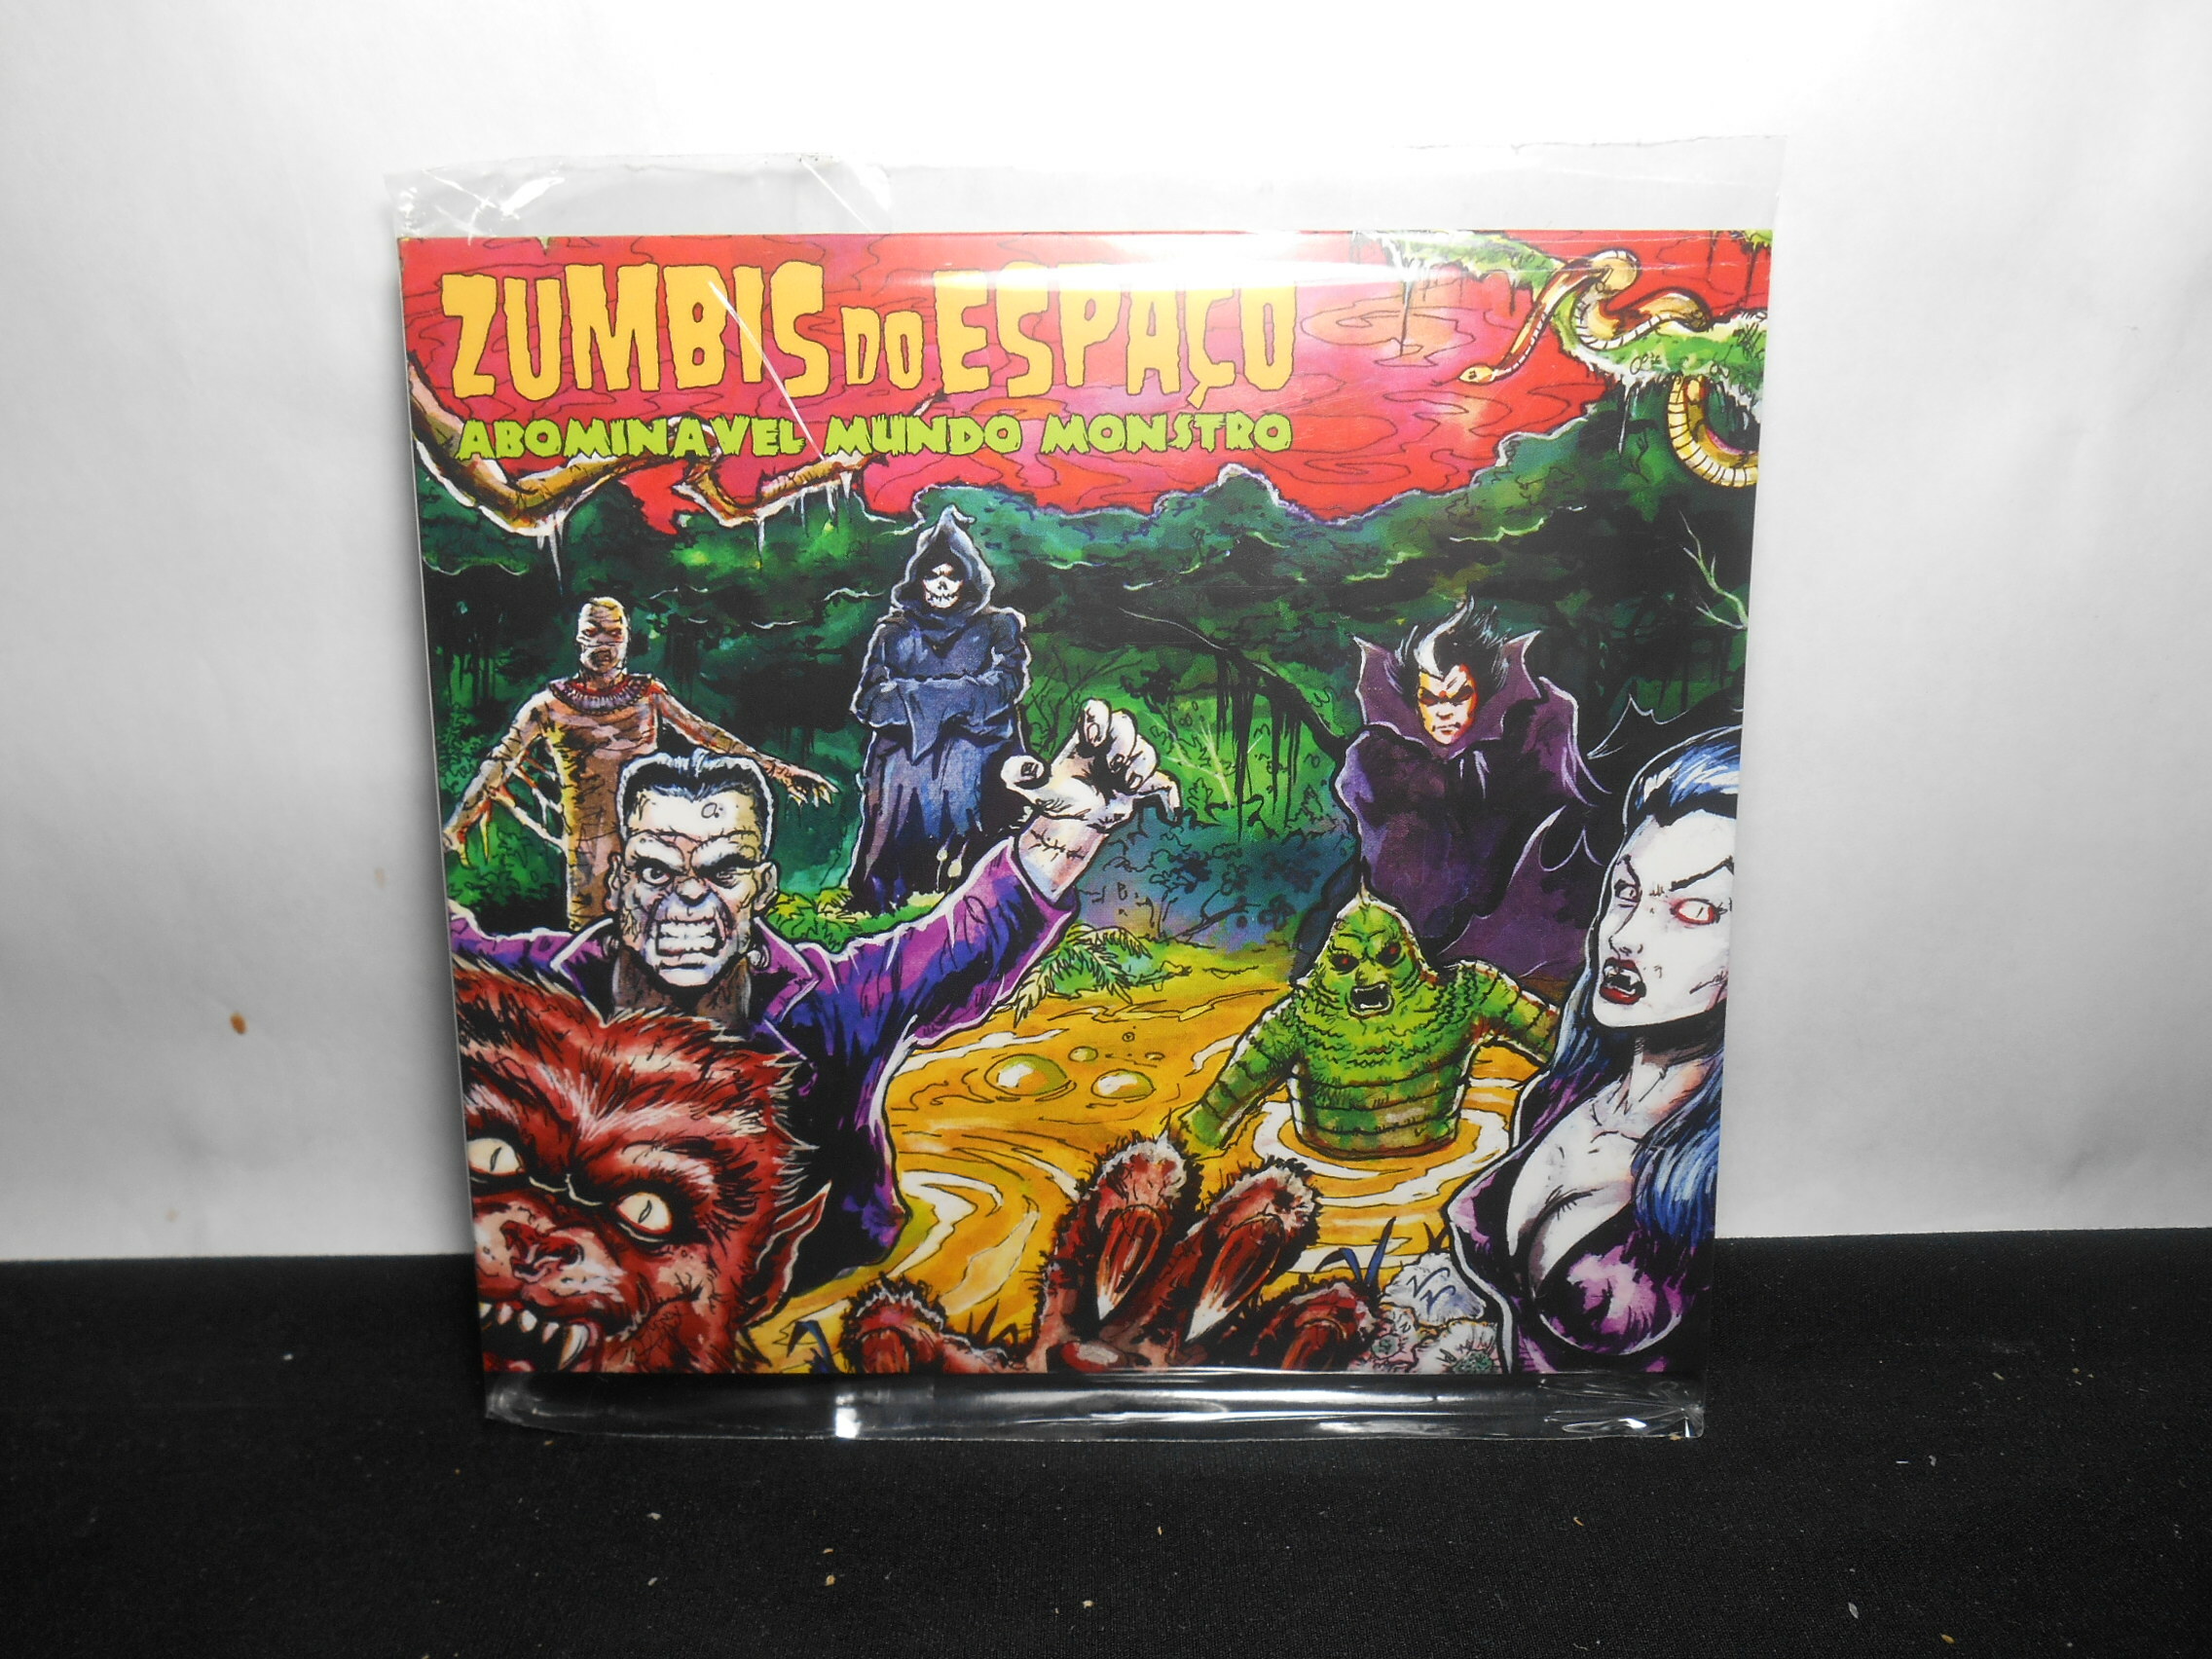 CD - Zumbis do Espaco - Abominável Mundo Monstro (Lacrado/Paper Sleeve)